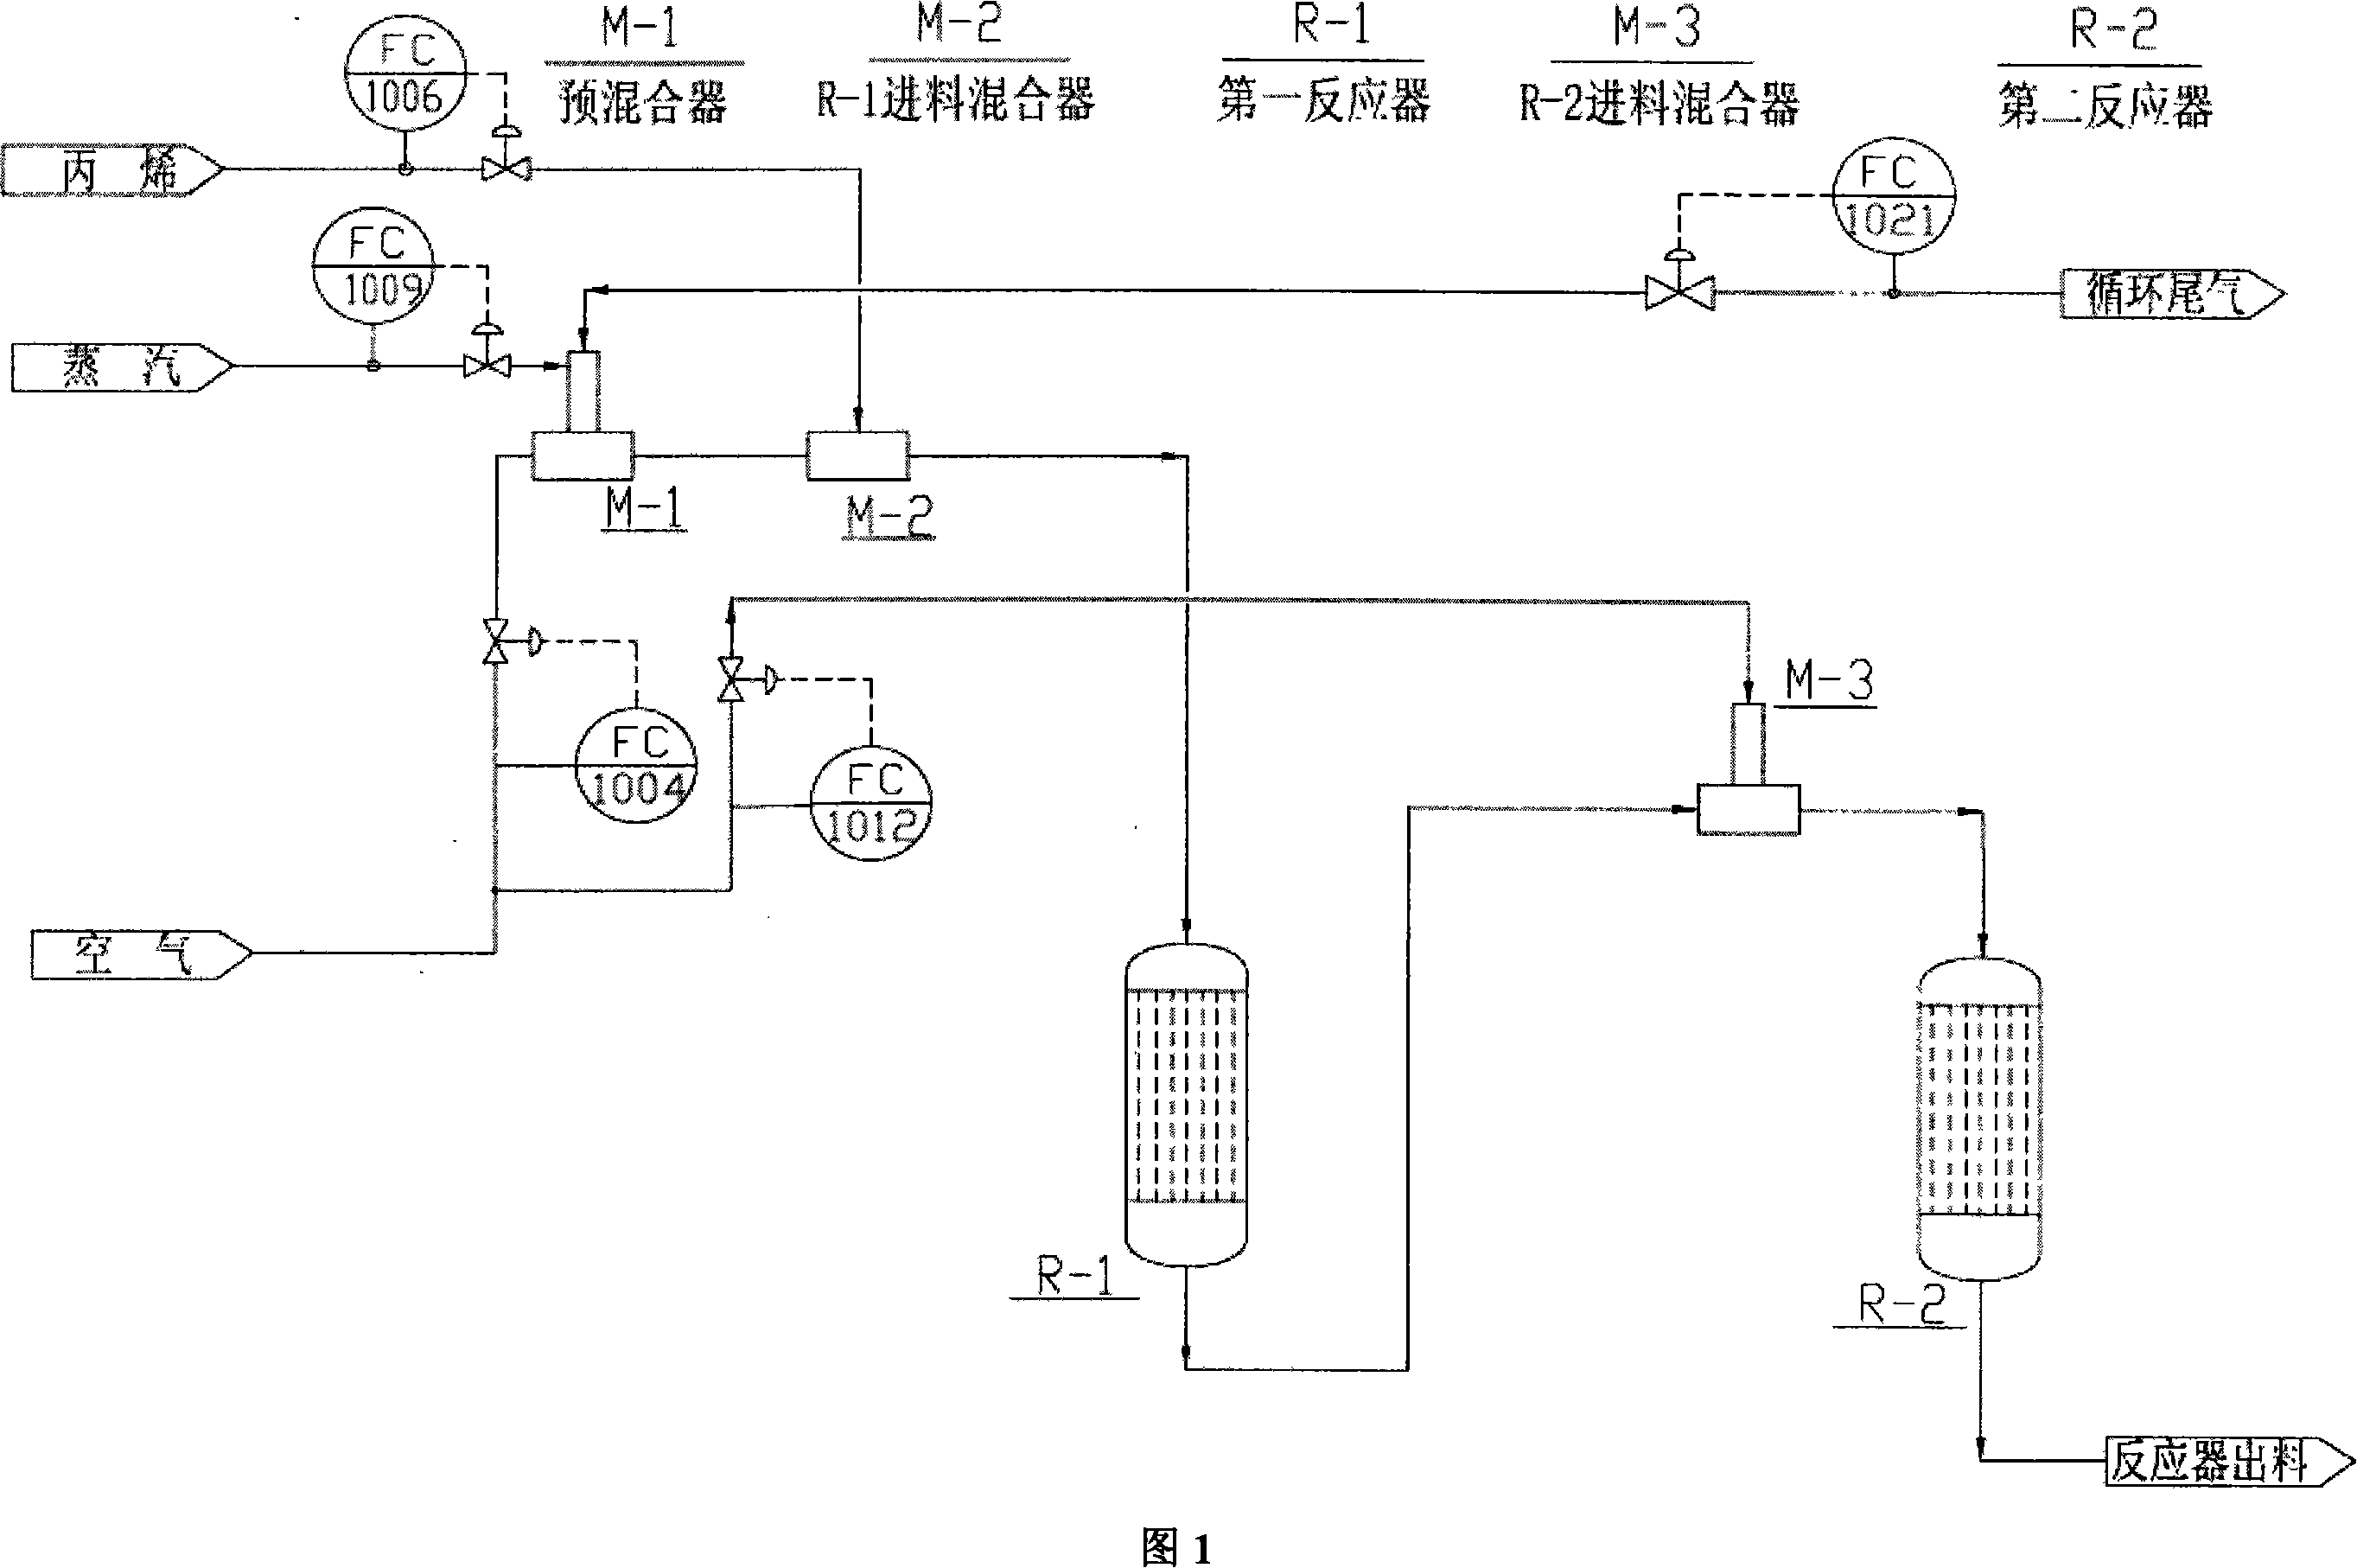 Propylene oxidation unit DCS control system in crylic acid device